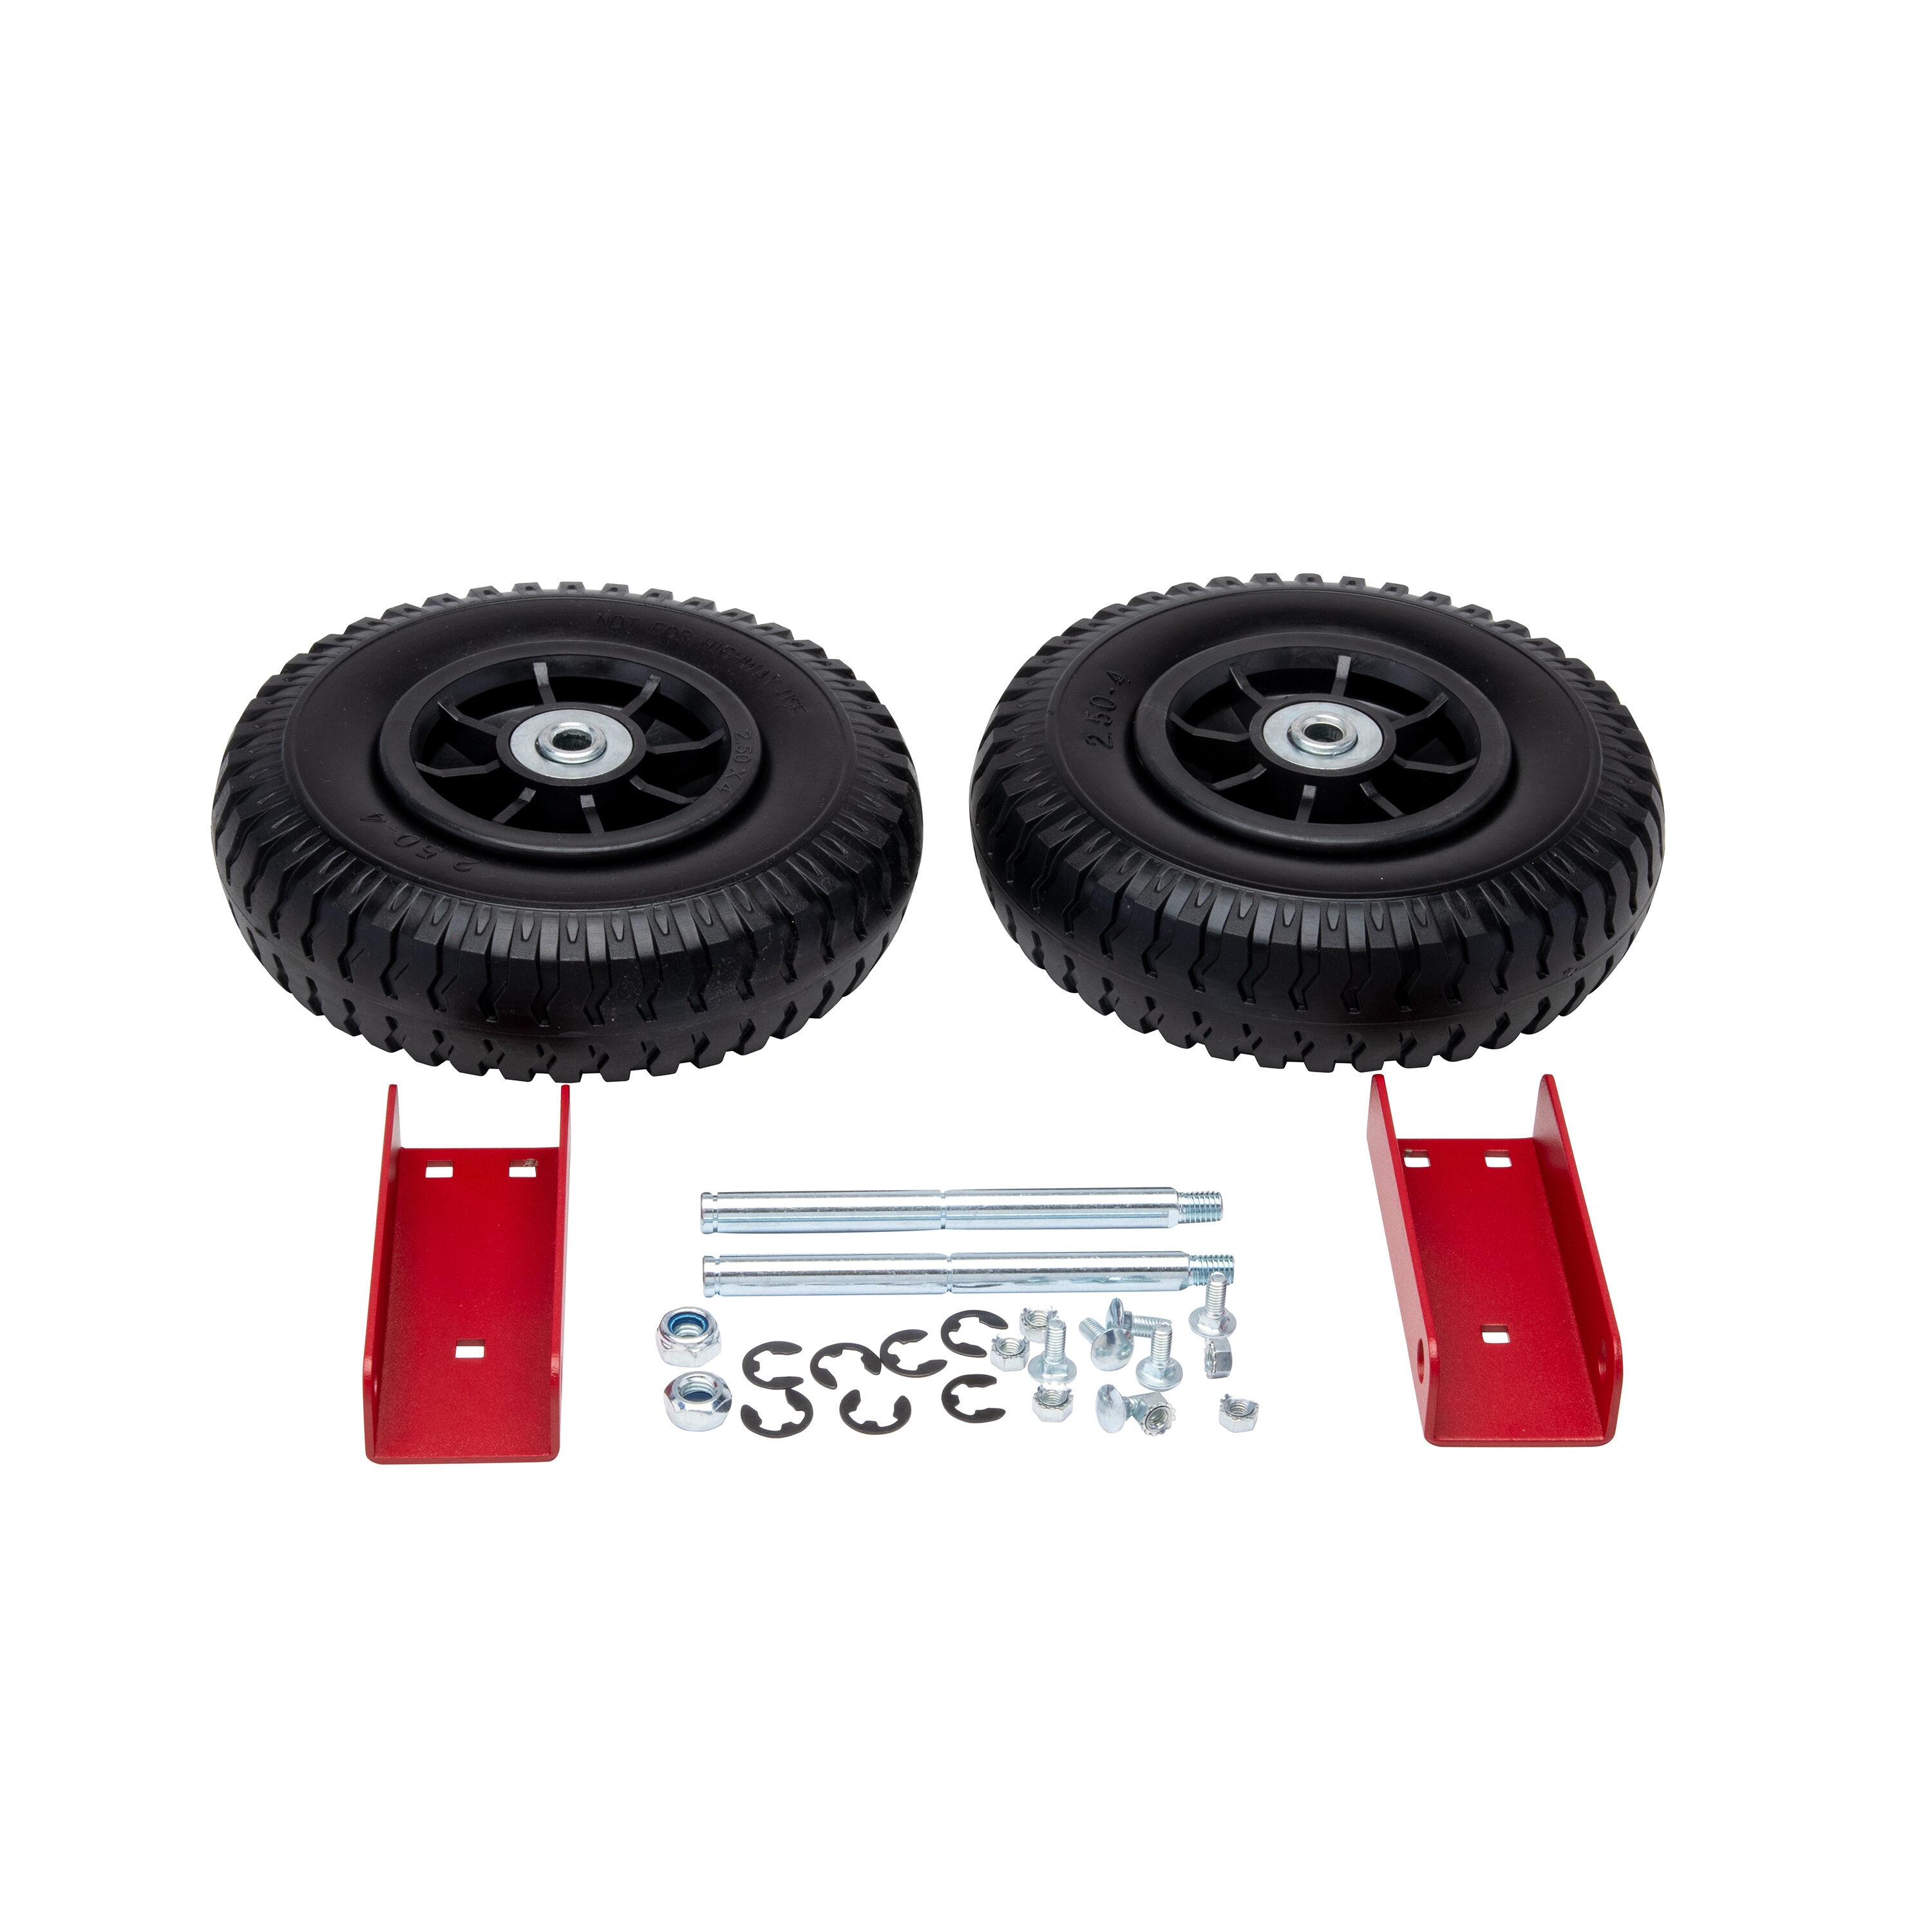 Alloy Wheel Scratch Repair Kit Wheel Repair Adhesive Kit With Anti-Rust  Waterproof Protective Features Auto